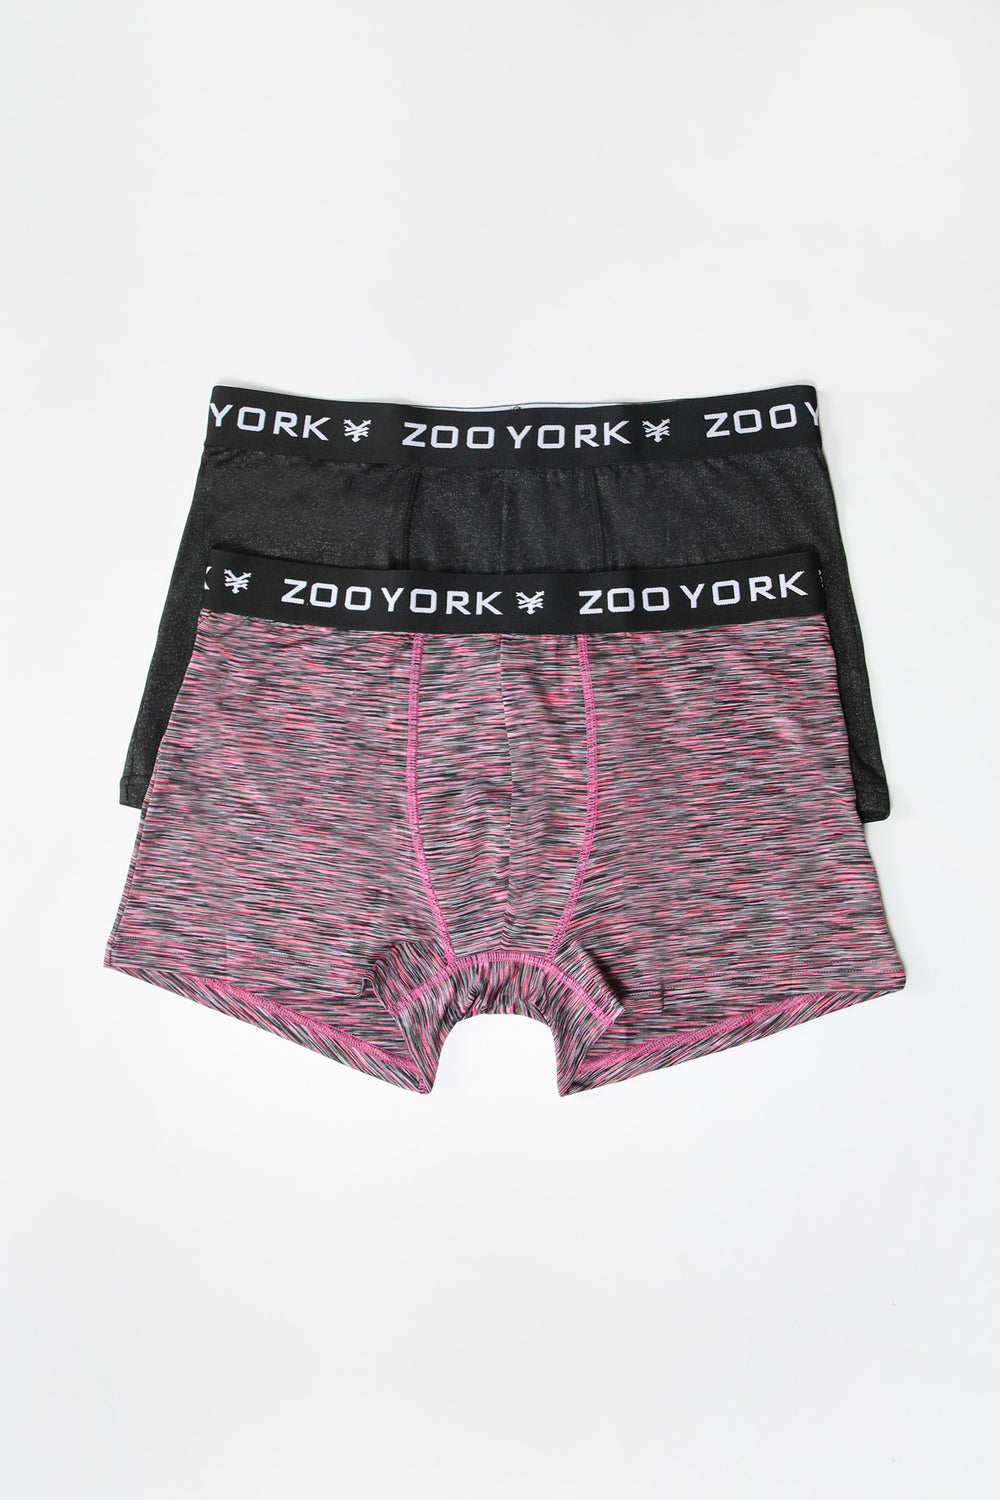 Zoo York Mens 2-Pack Space Dye Boxer Briefs Pink